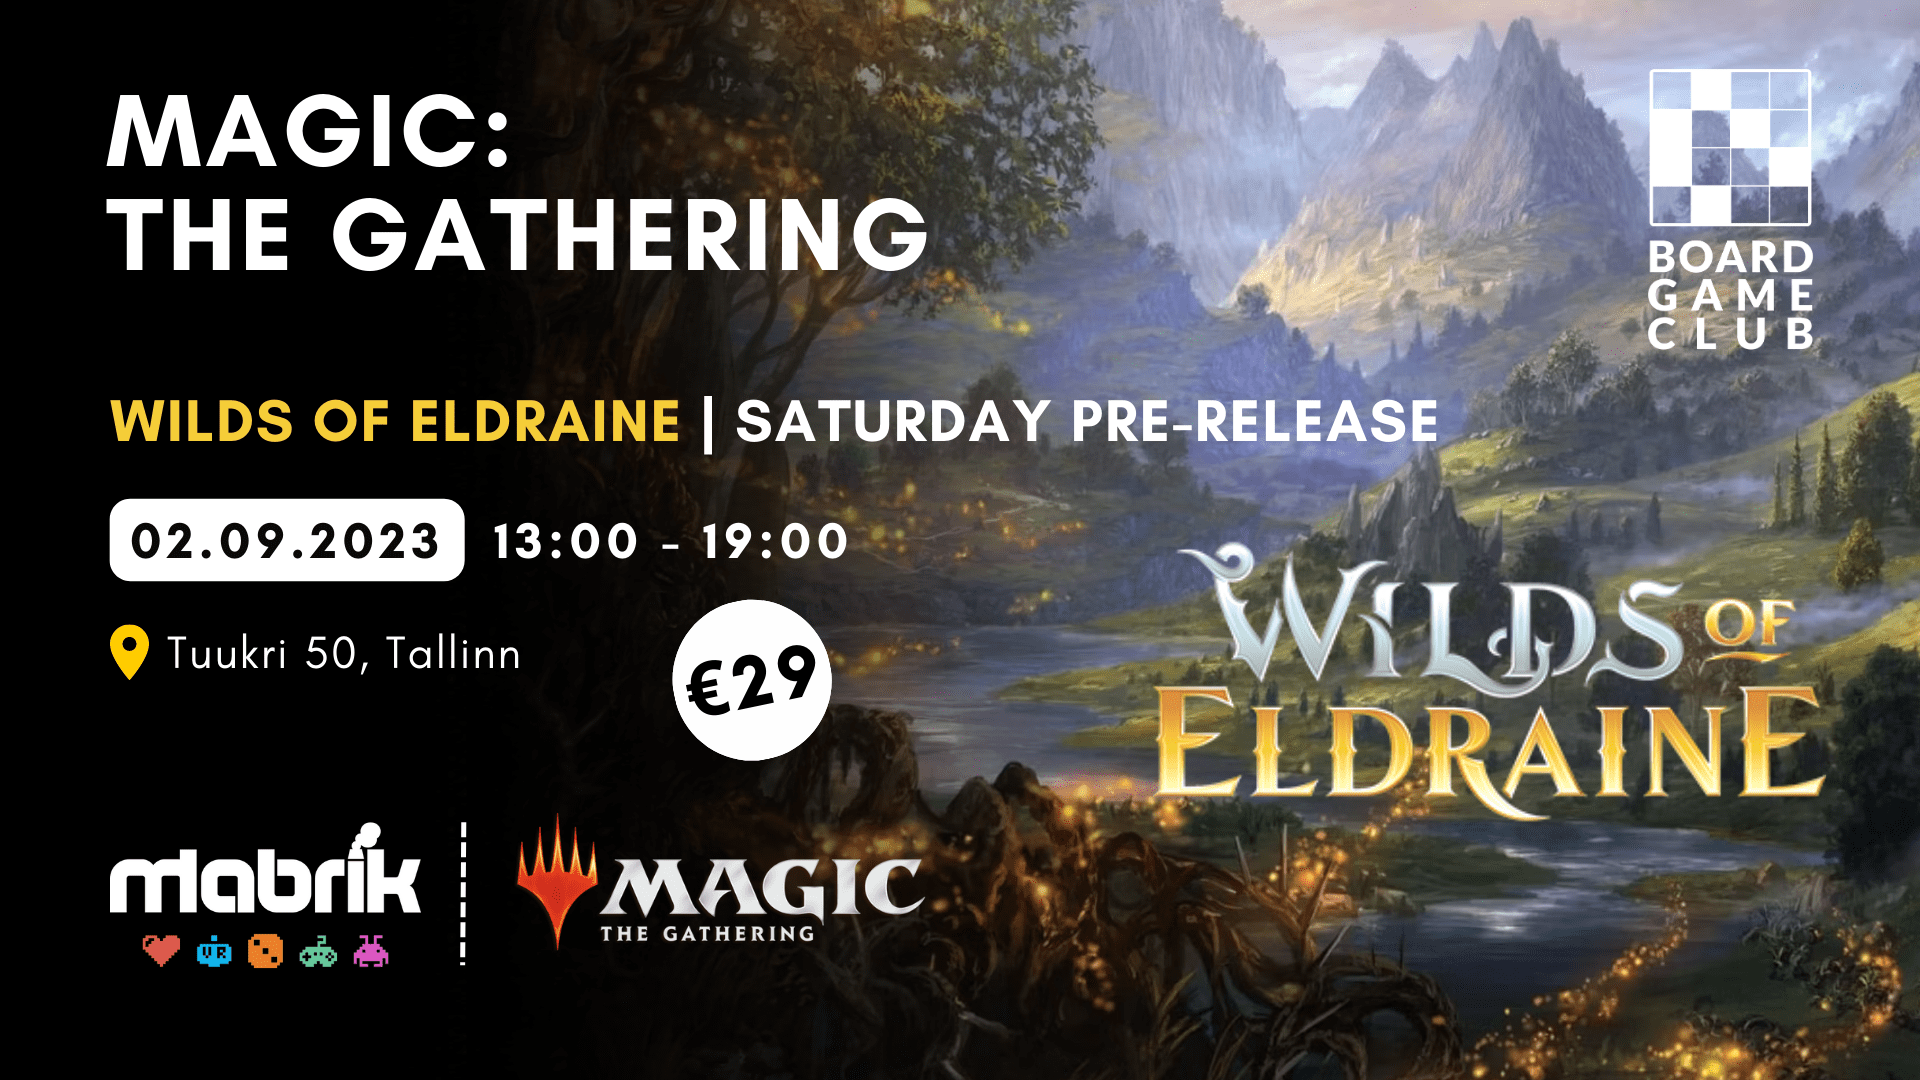 Events - 02.09.2023 - MTG: Wilds of Eldraine Saturday Pre-Release